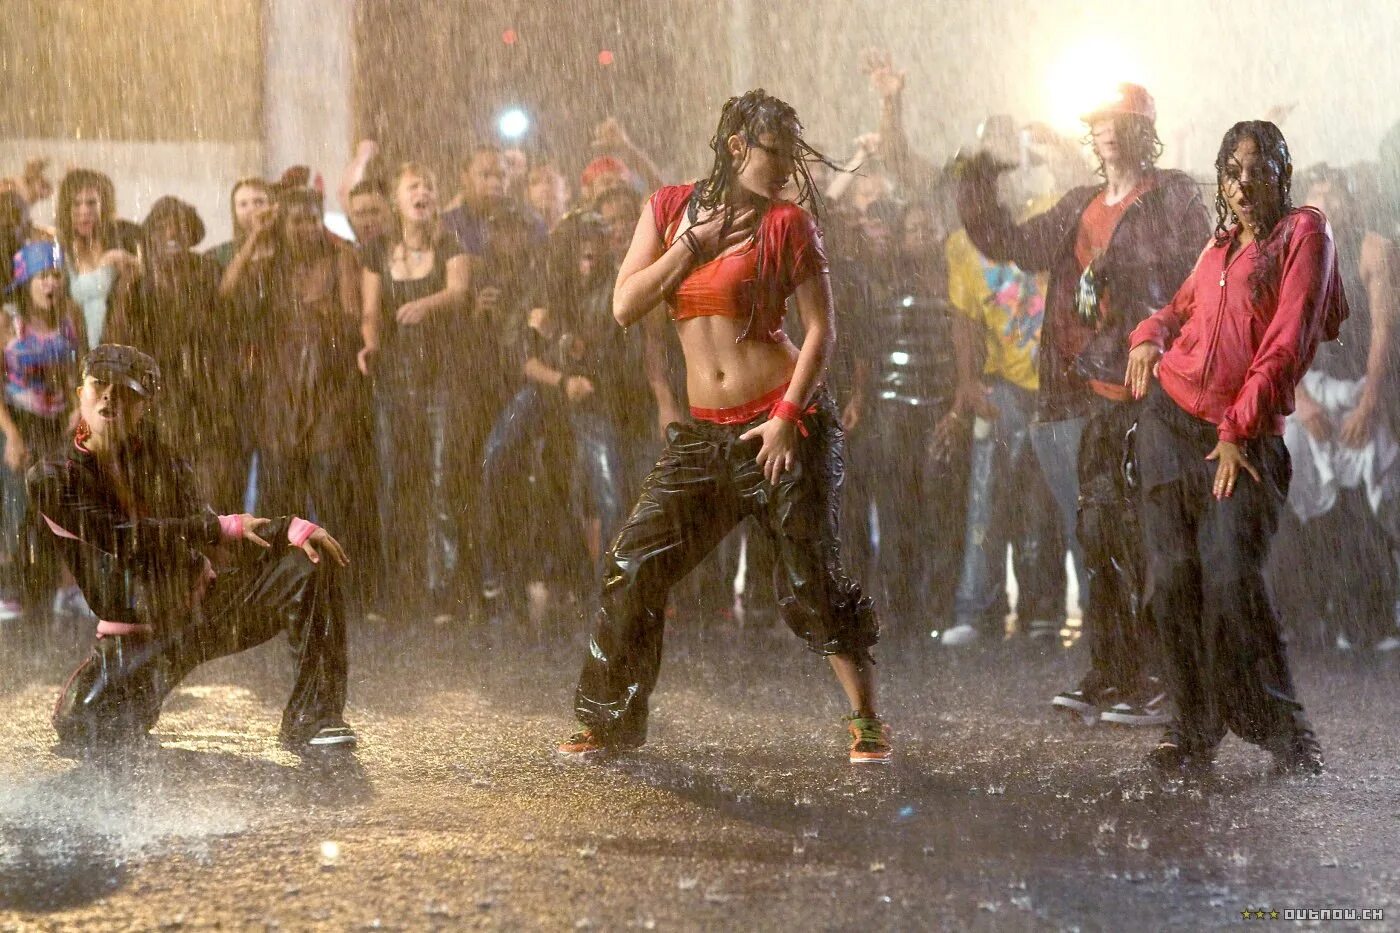 Красивая клип танцуй. Шаг вперед 2 улицы под дождём.